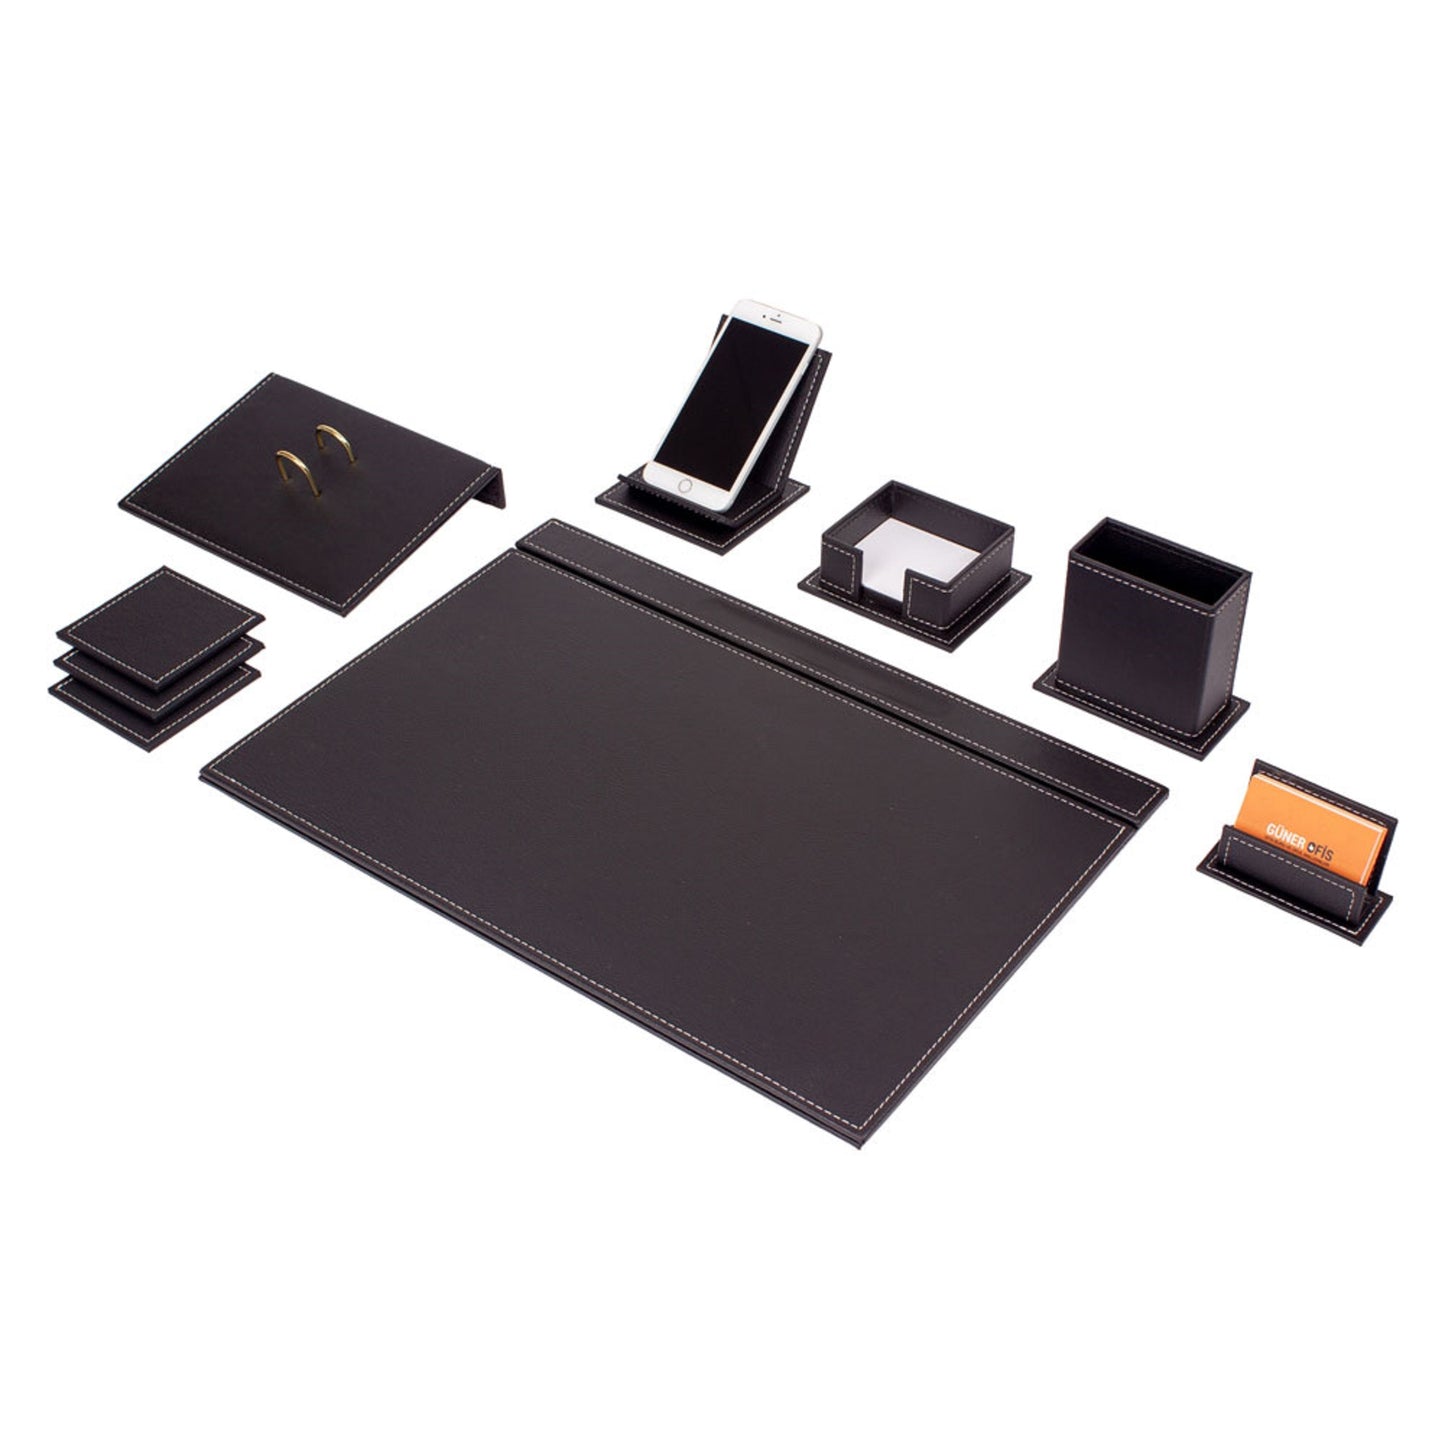 MOOGCO Leather Desk Set - Leather Organizer Desk Set - Walnut Wood Desk Set  - Office Product - Desk Accessories Set - 11 PCS (White)